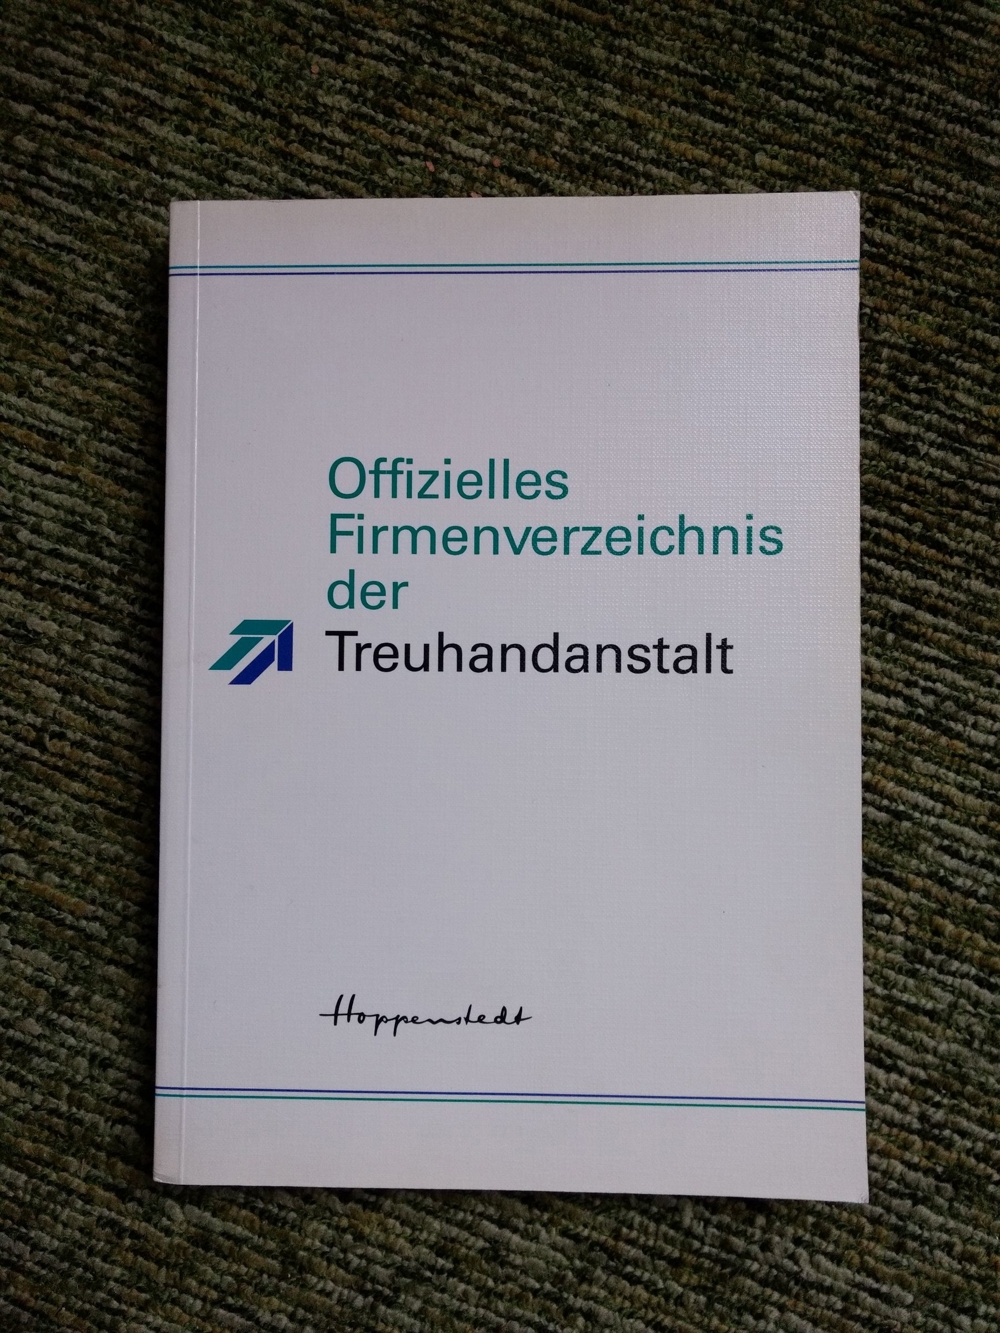 Hoppenstedt, Offizielles Treuhandverzeichnis, 1991